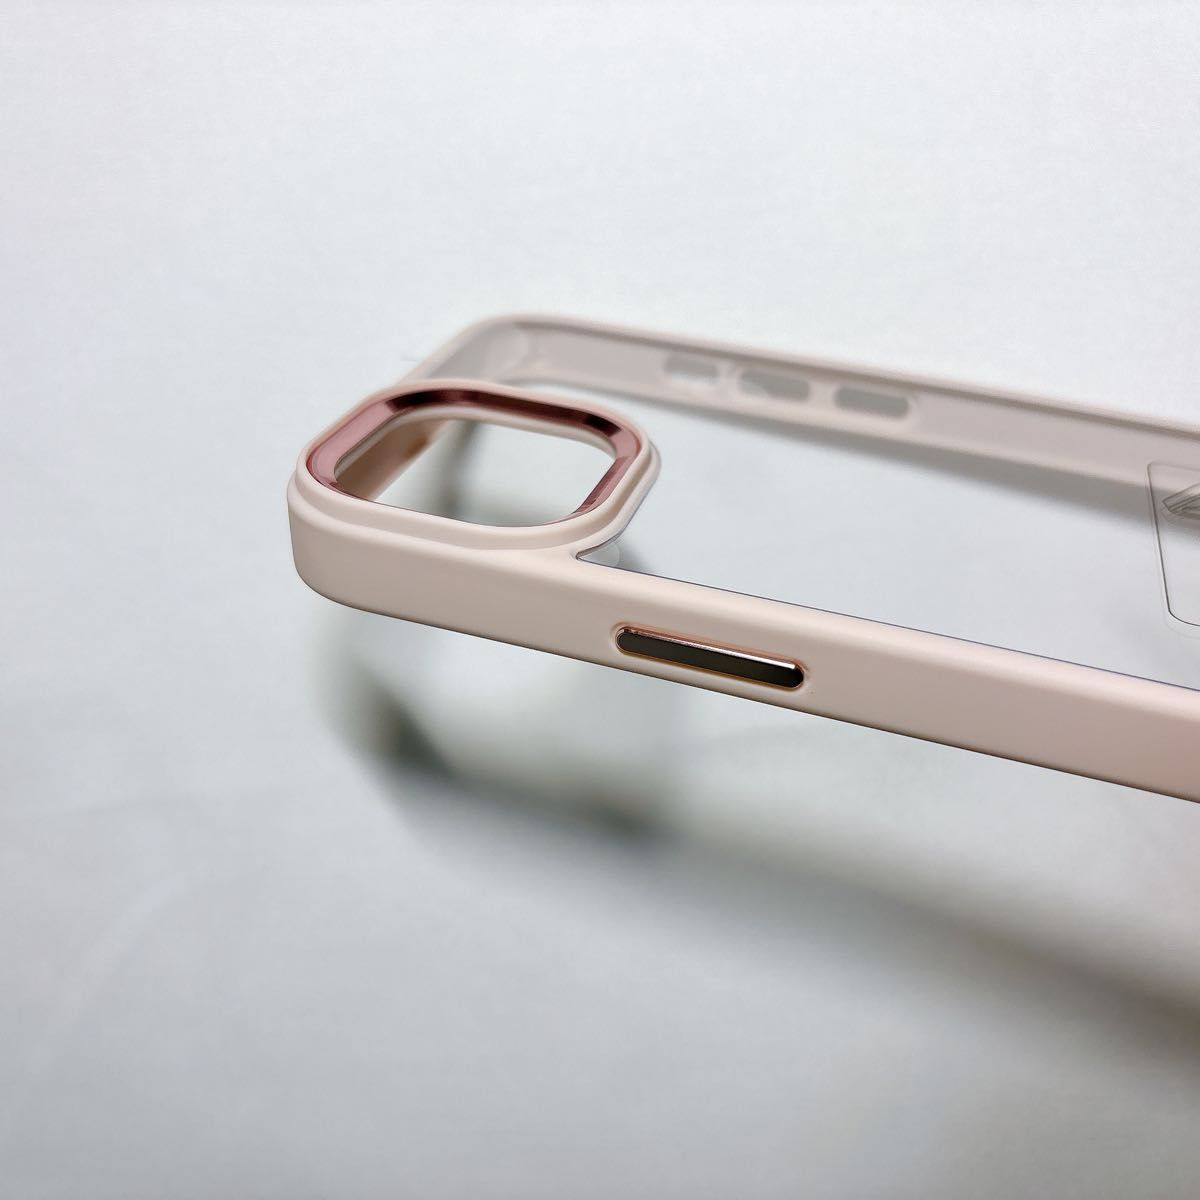 iPhone14 ケース ピンク シンプル 韓国 軽量 スマホケース クリア 透明 可愛い お洒落 耐衝撃 カバー 無地